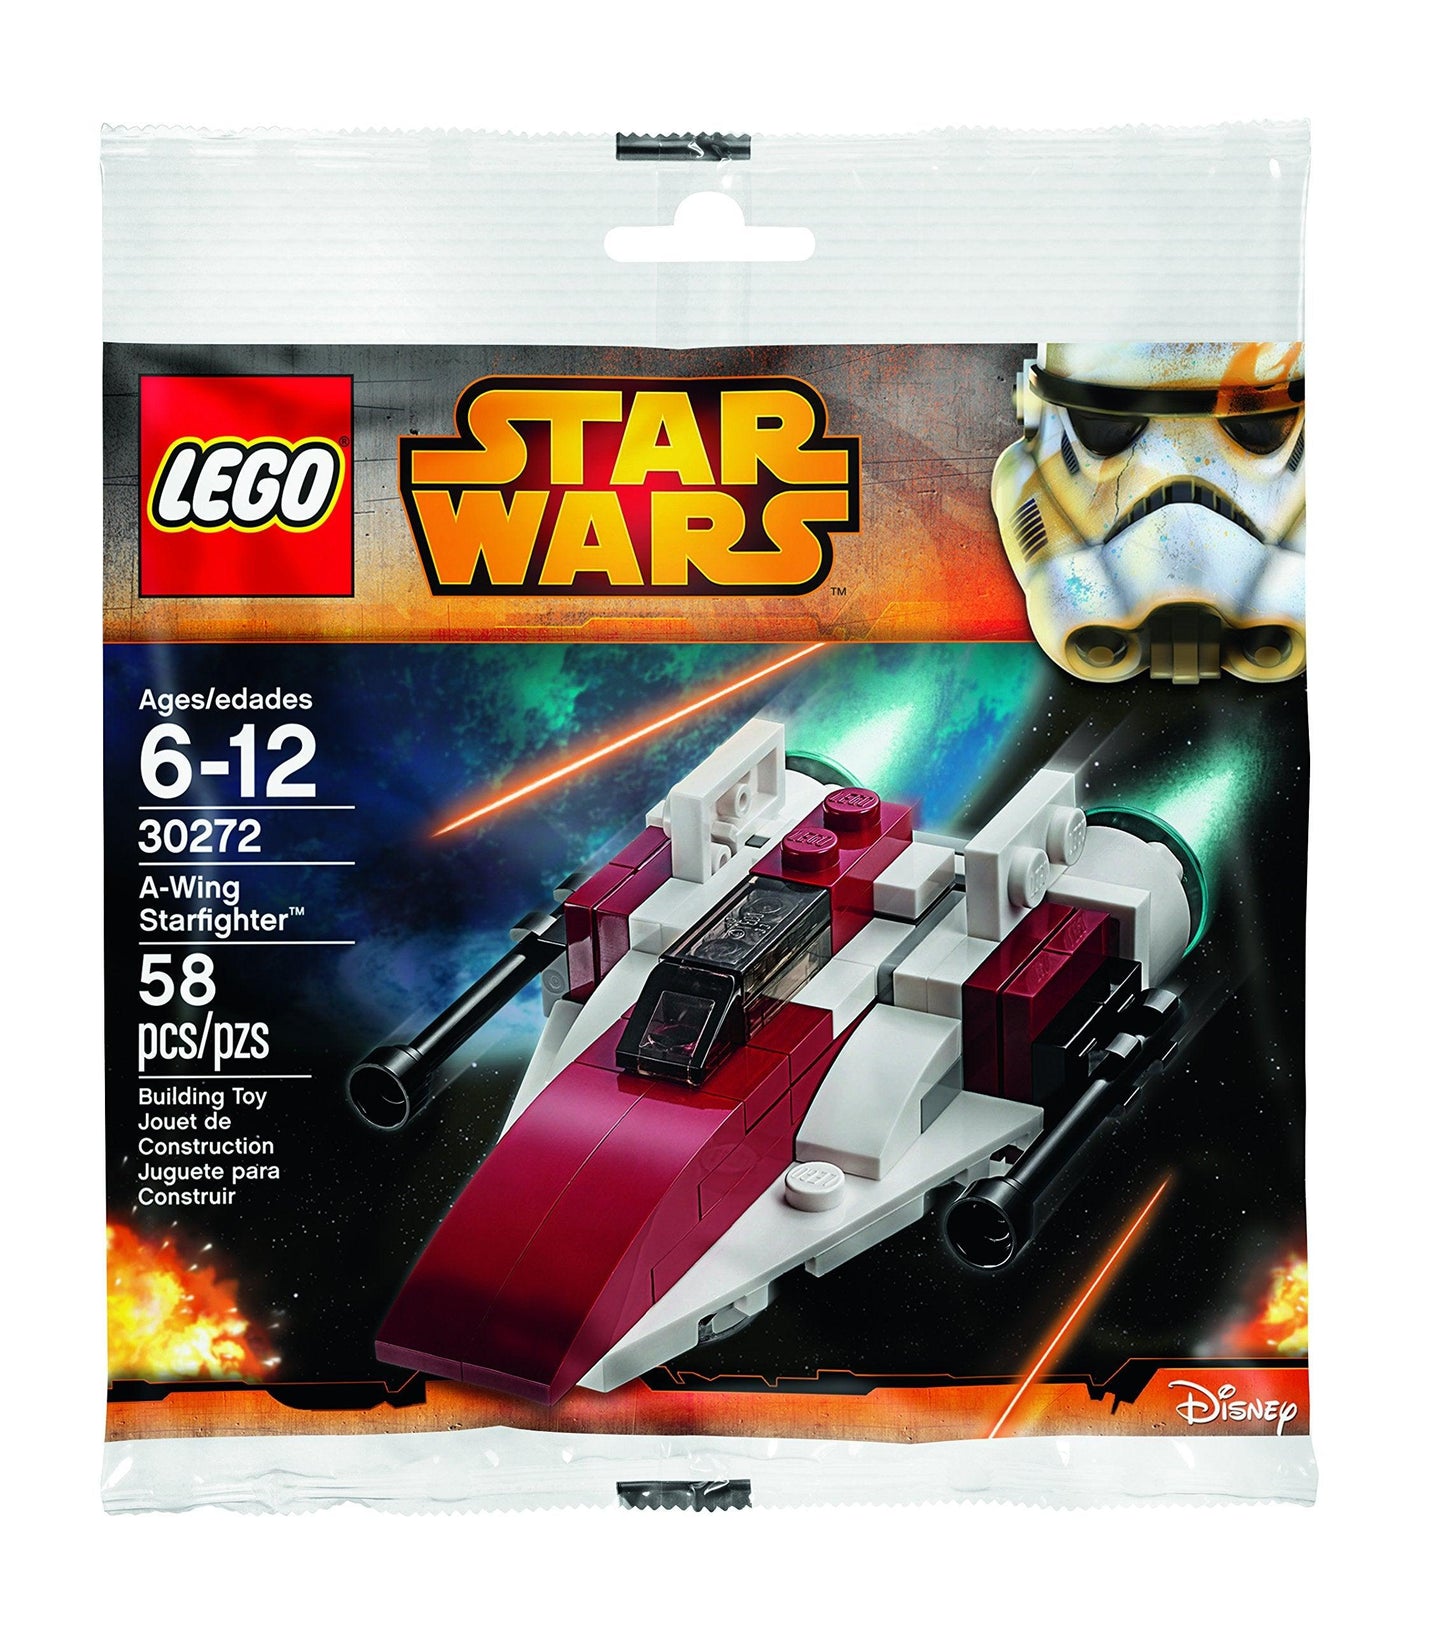 LEGO A-Wing Starfighter 30272 Star Wars - Episode VI LEGO STARWARS @ 2TTOYS LEGO €. 8.49